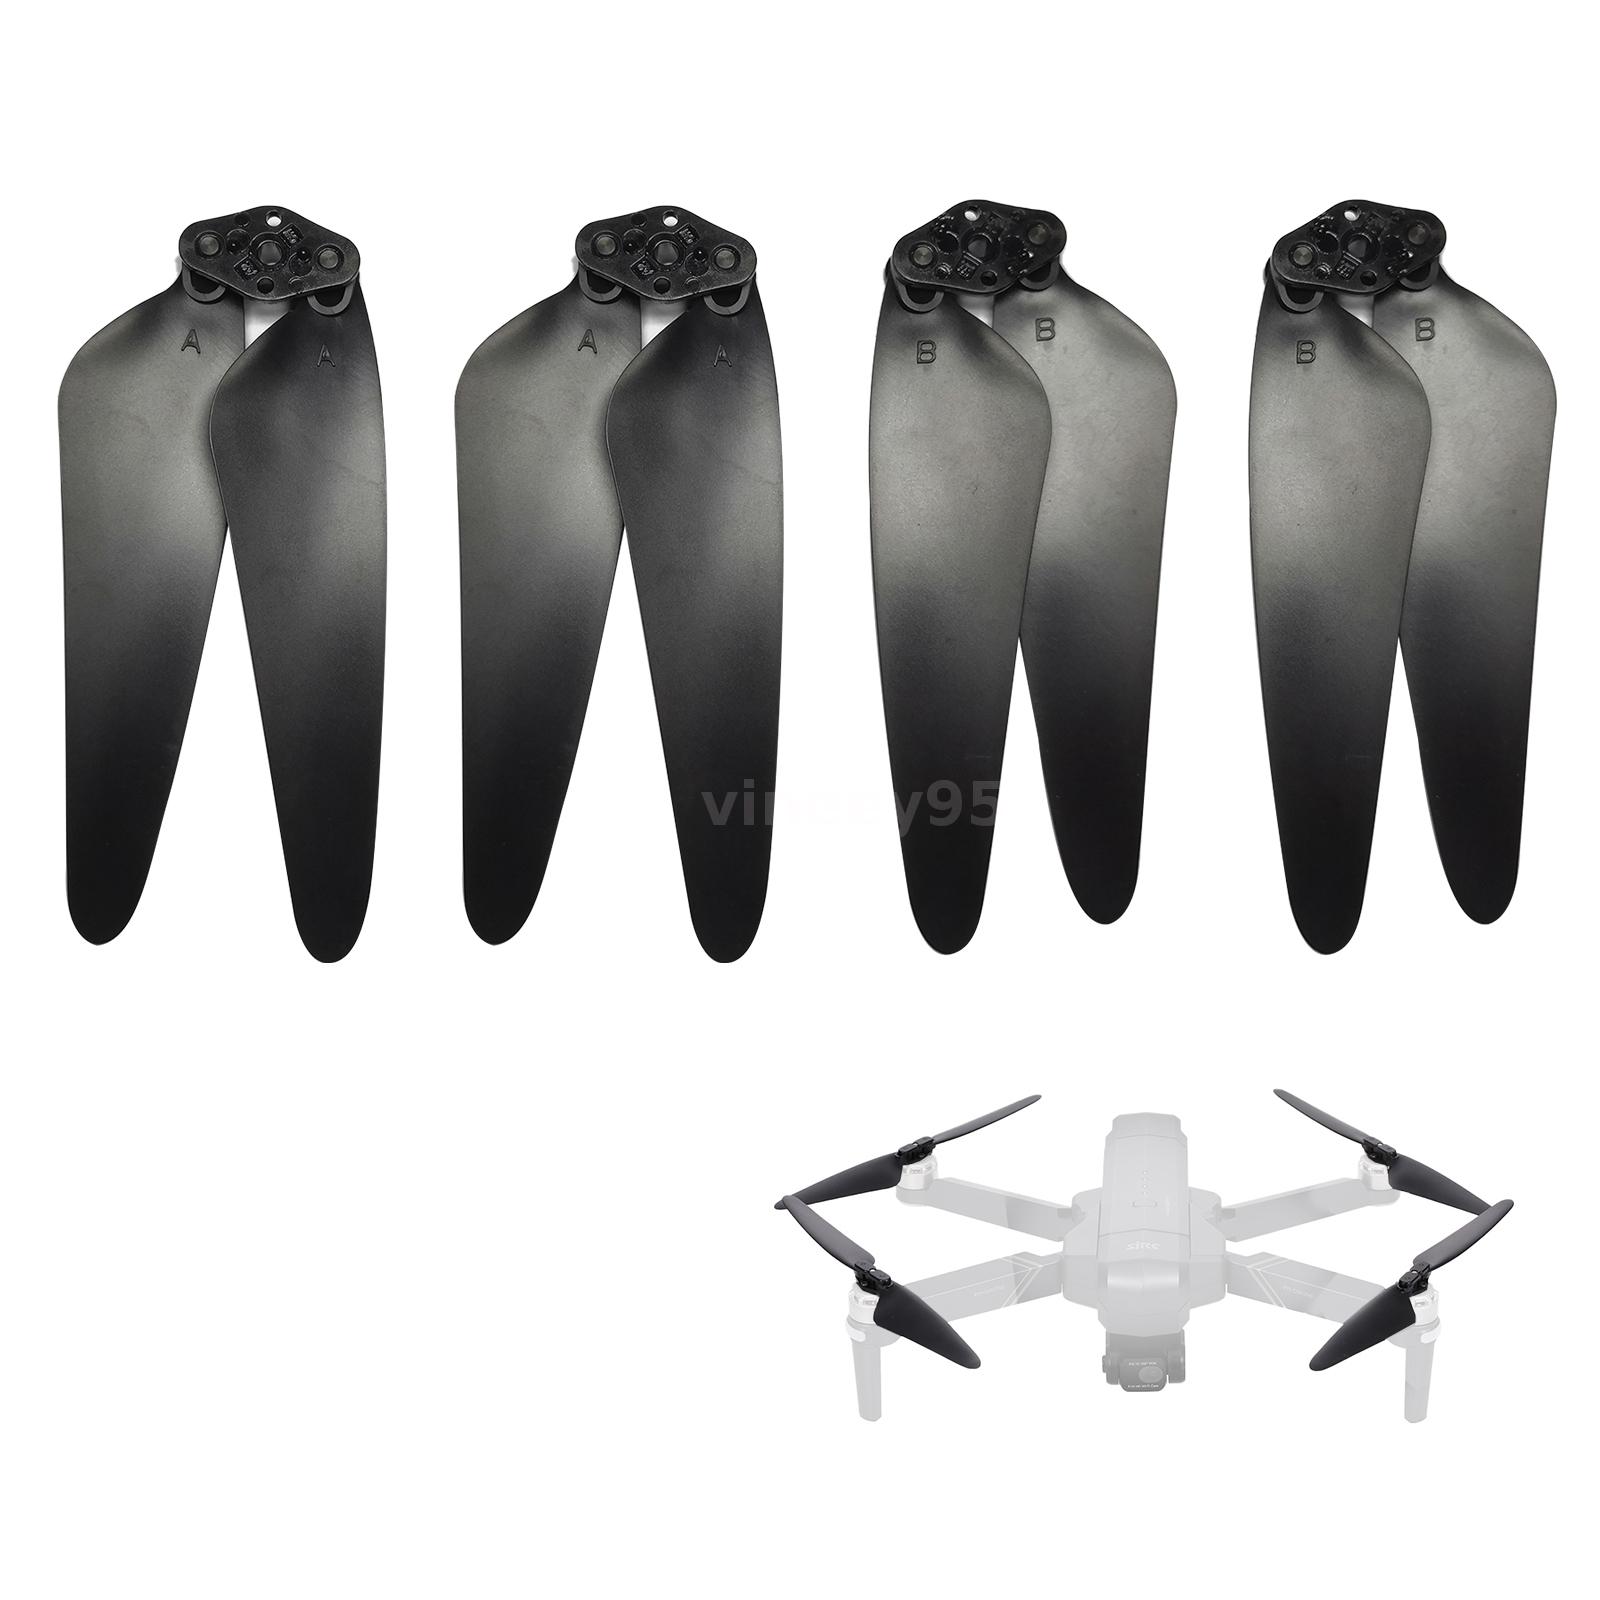 SJRC F11 Pro 4K RC drone parts Blades landing skid extend spring leg Propellers